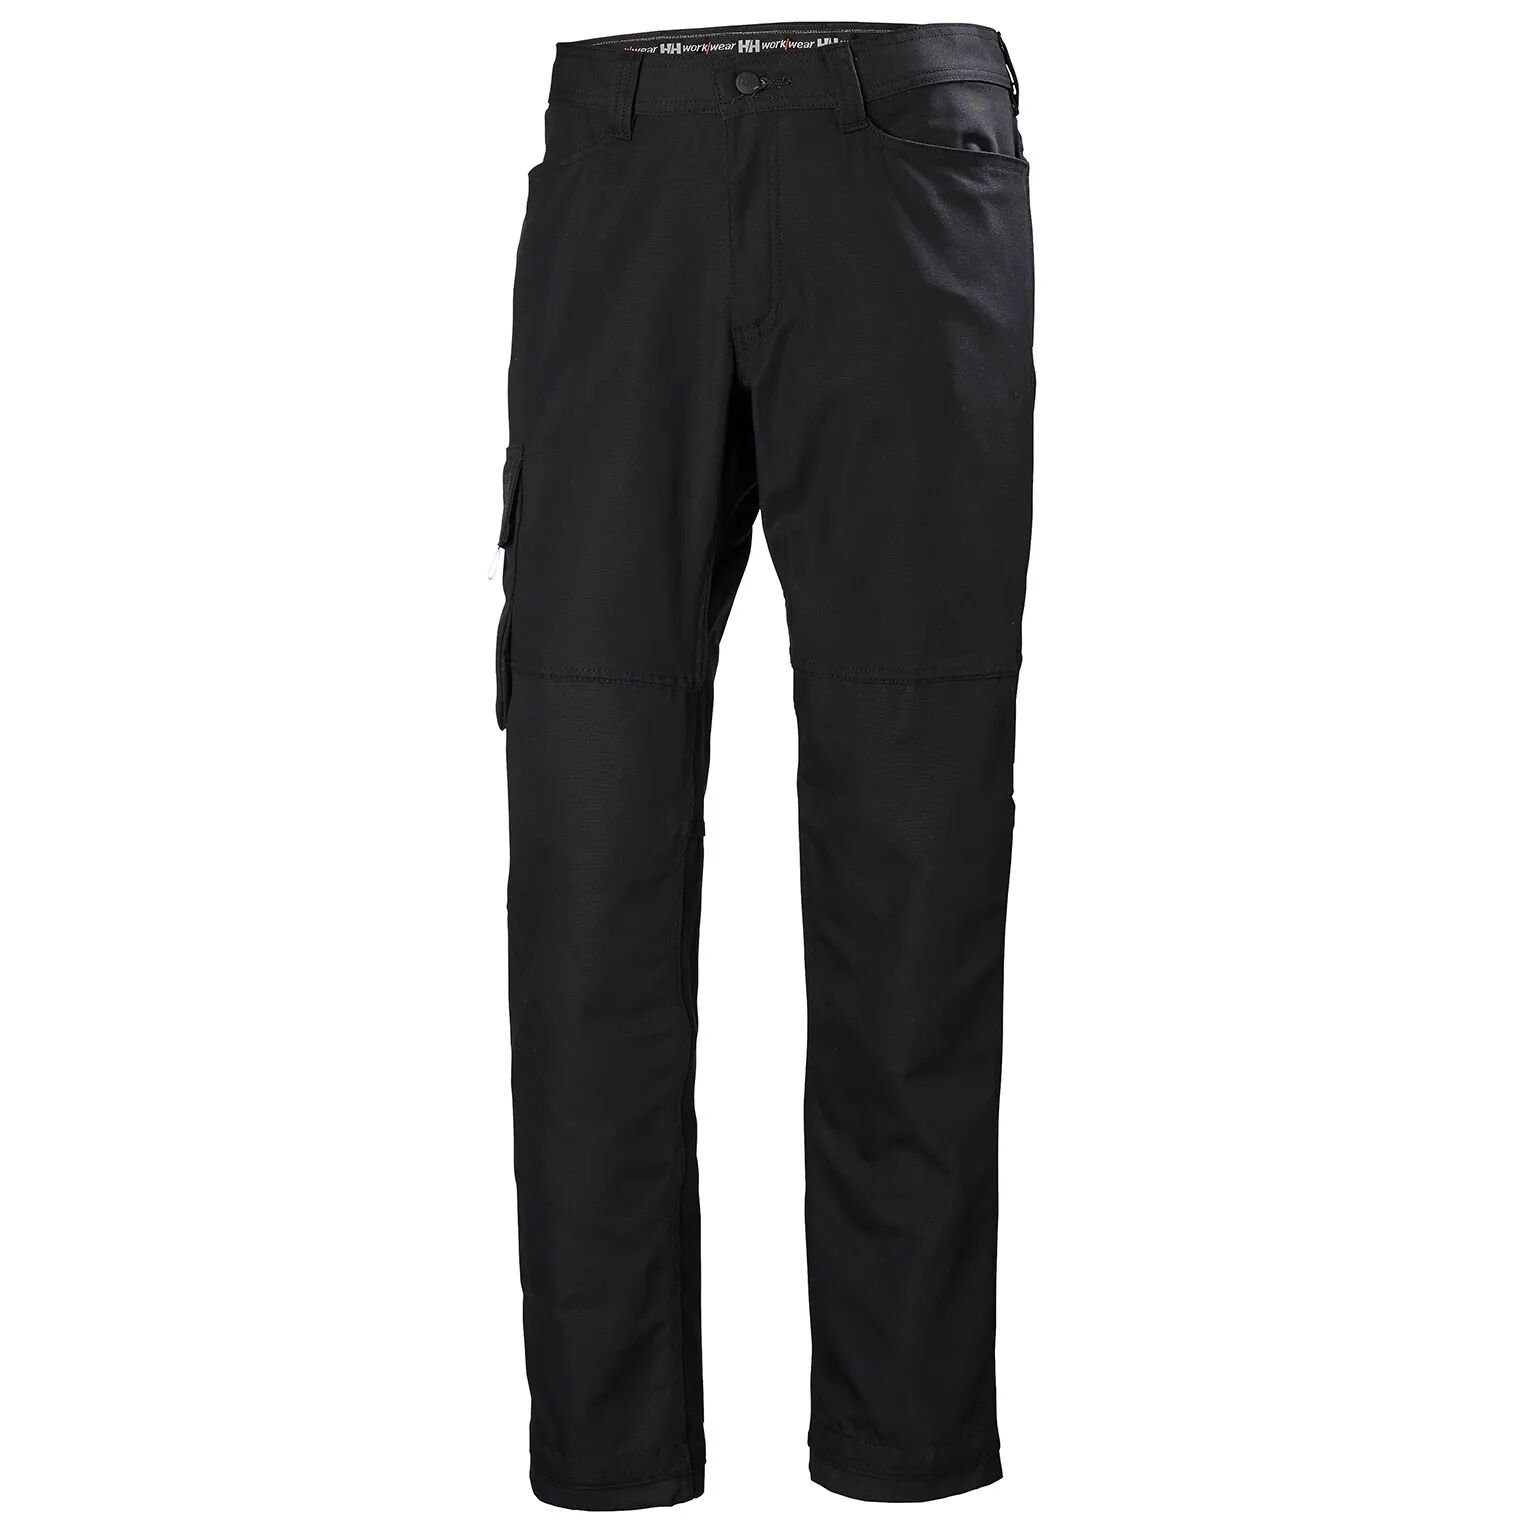 HH Workwear Helly Hansen WorkwearOxford Service Pant NA Black 38/30